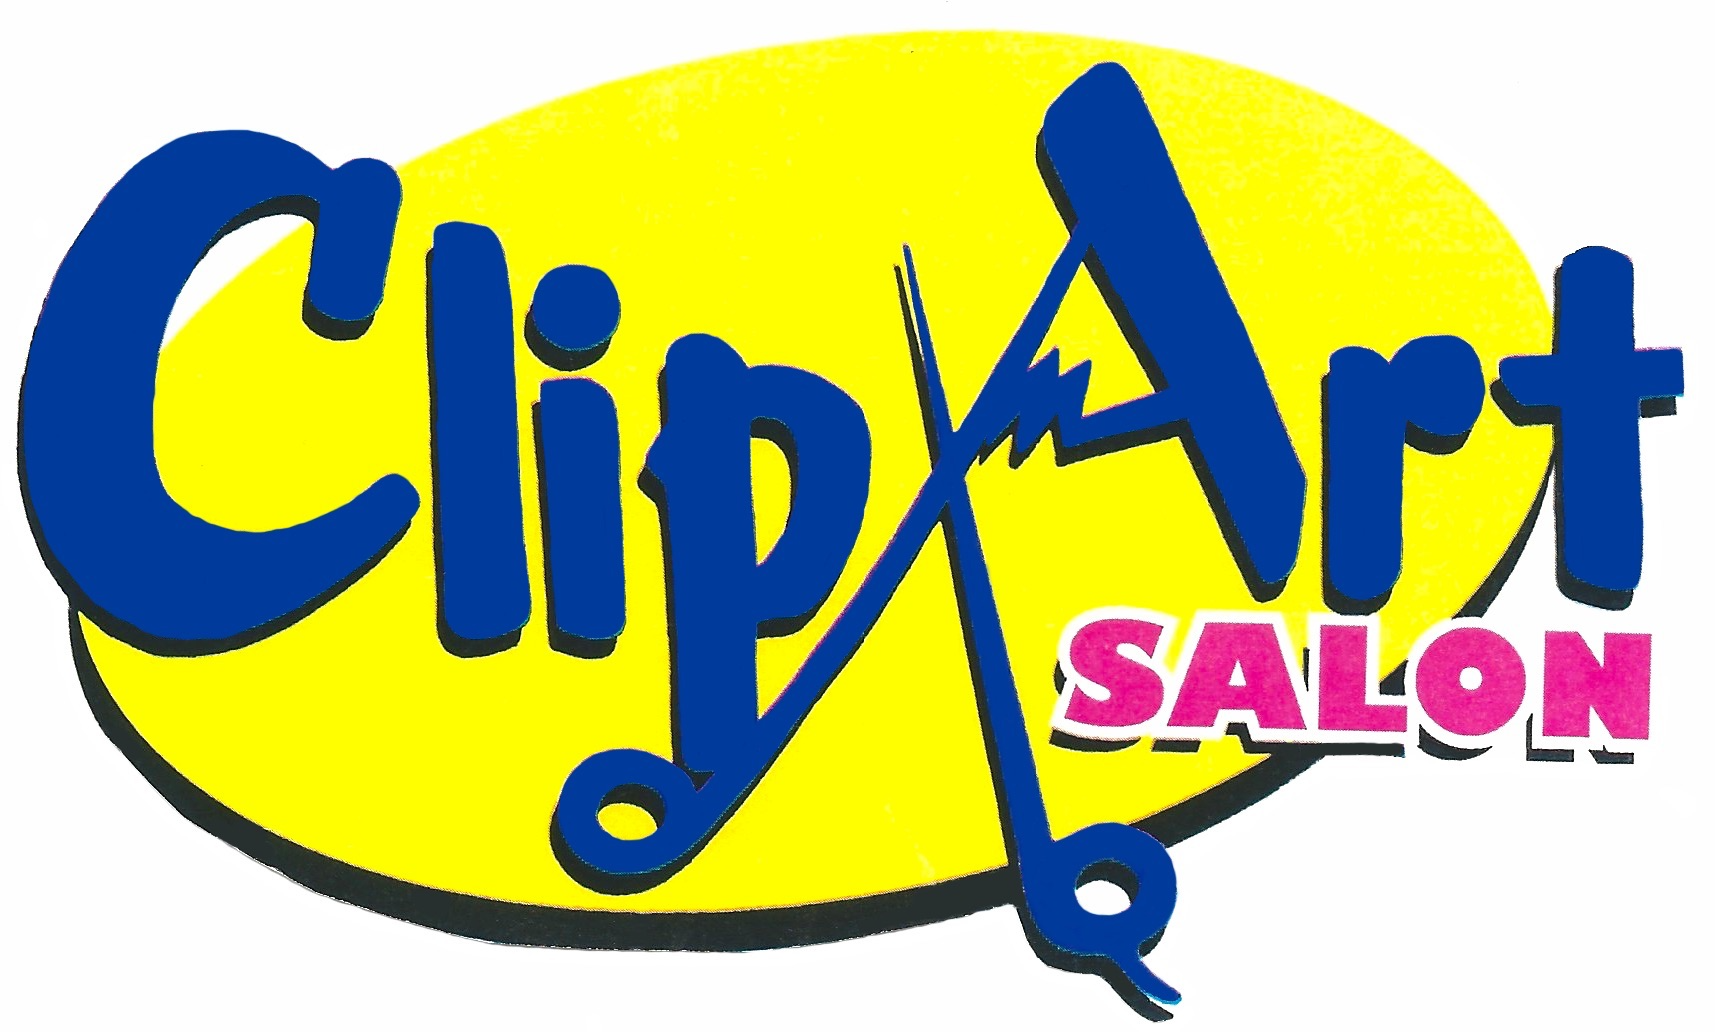 Clip Art Salon, Inc.